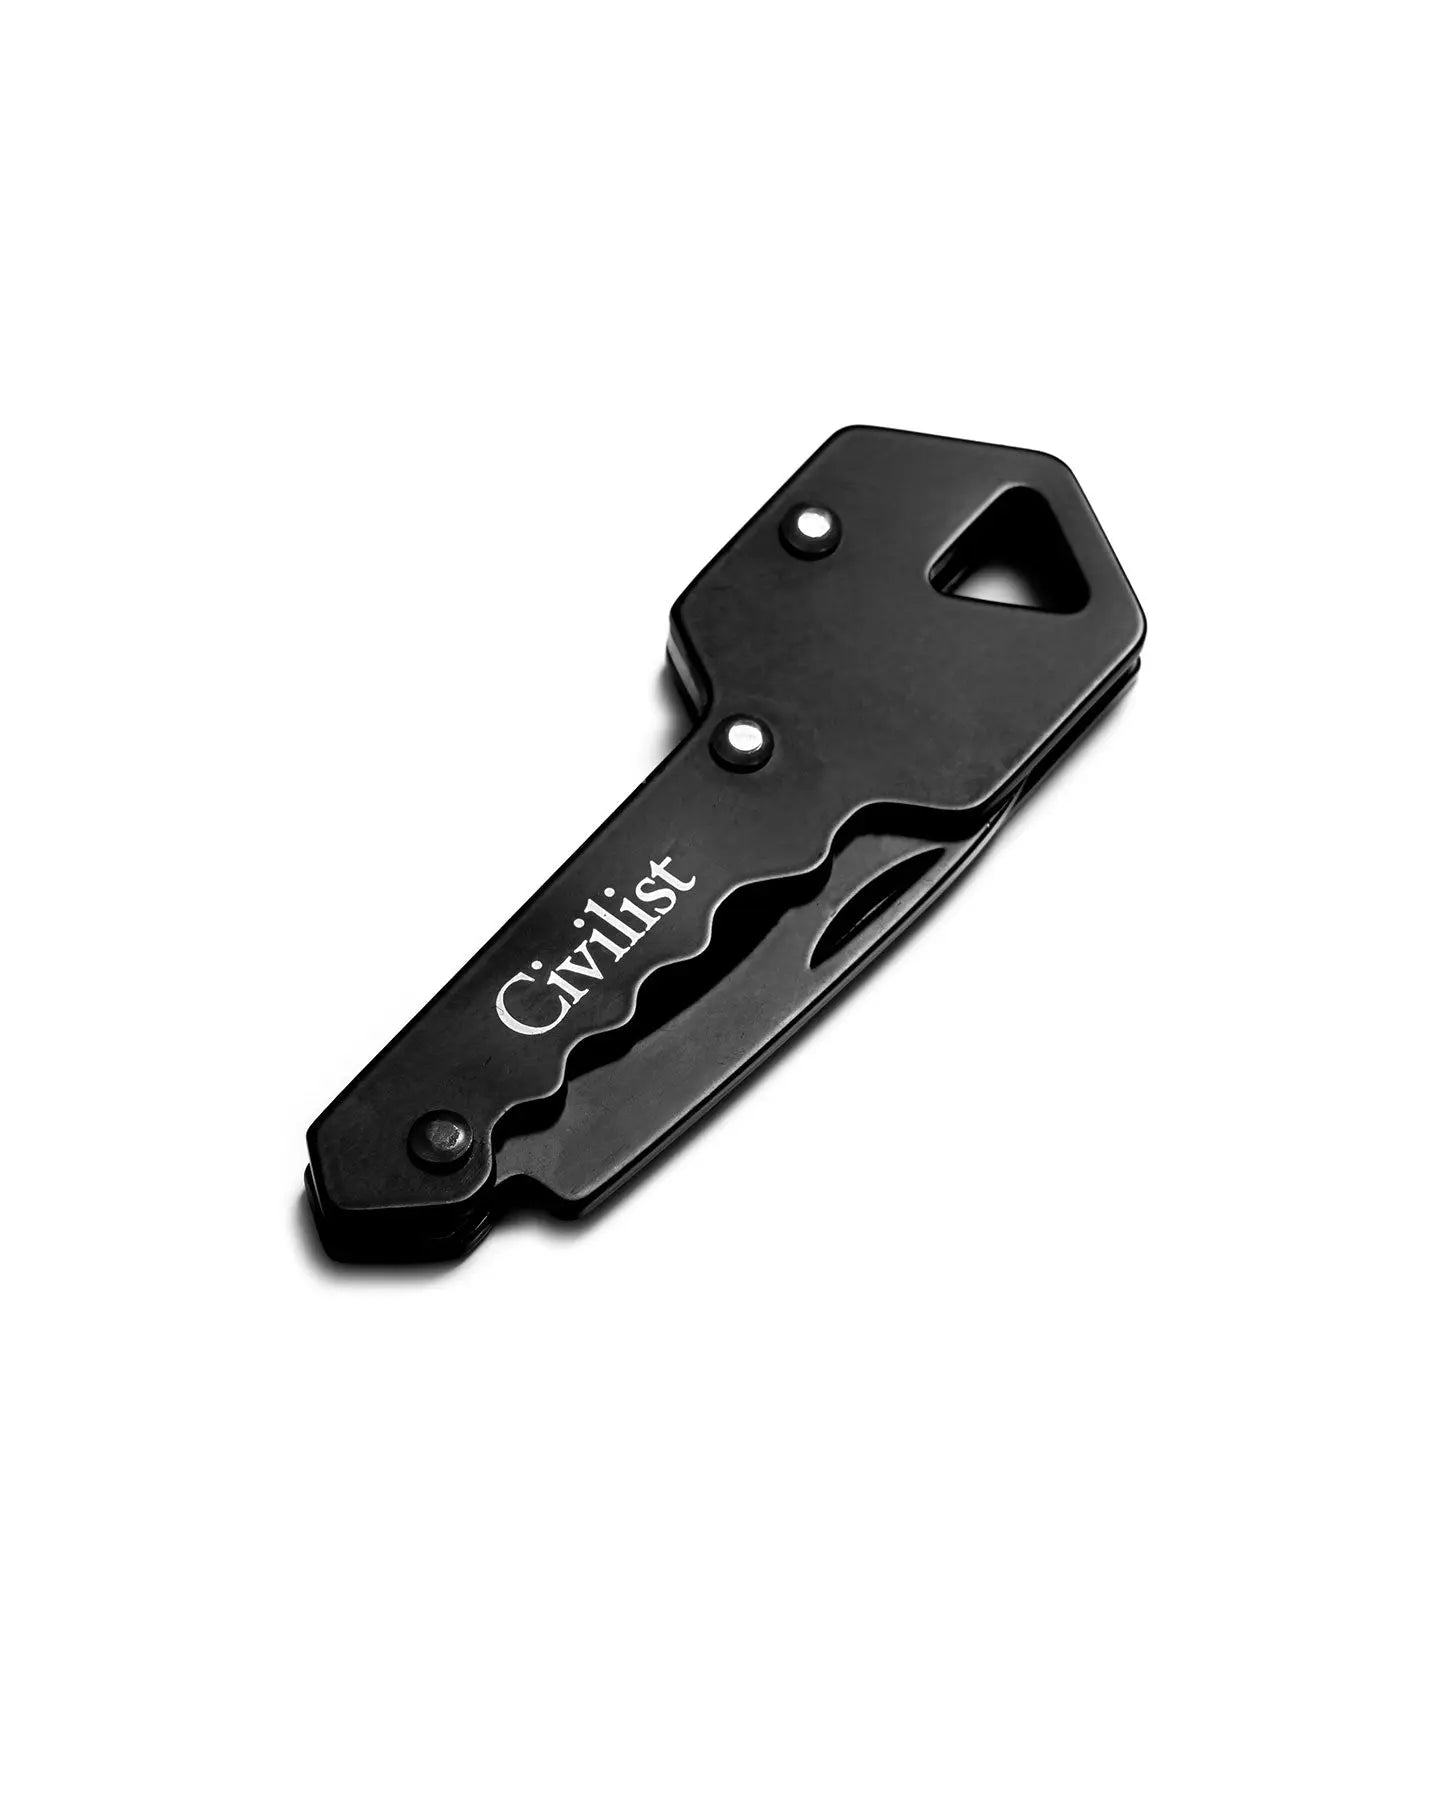 Civilist Grip Tape Tool - Black Accessories